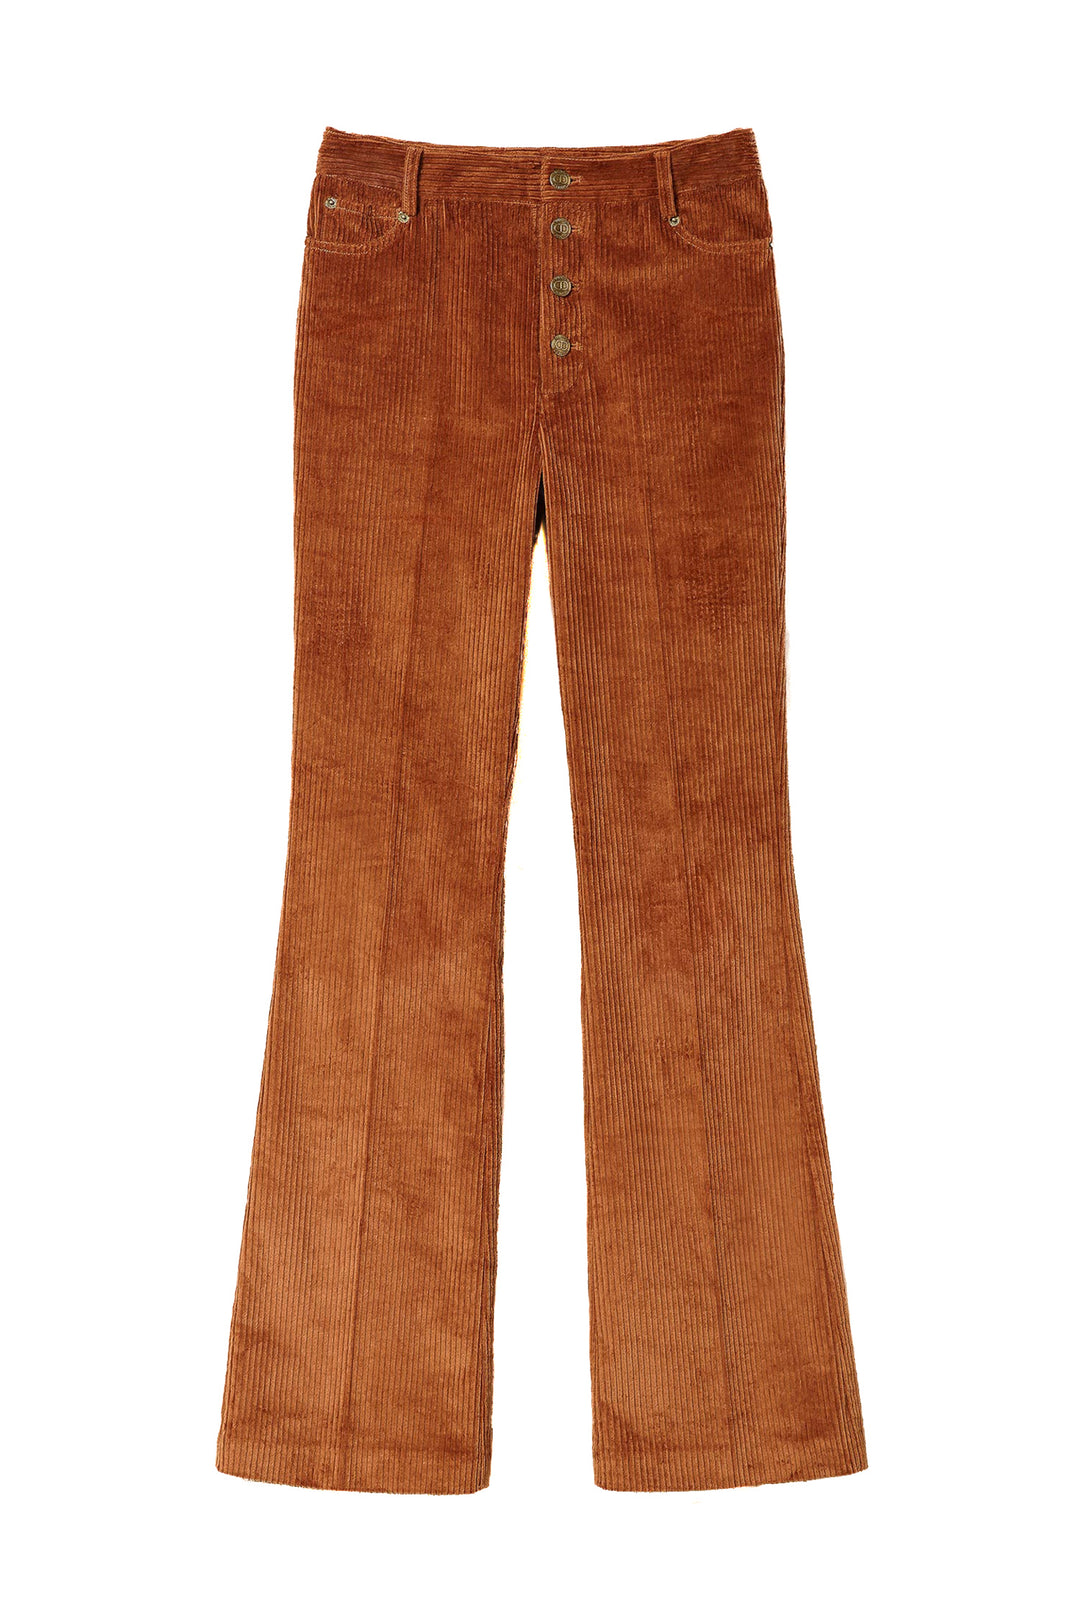 TWINSET Pantaloni flare marroni in velluto a coste - Mancinelli 1954